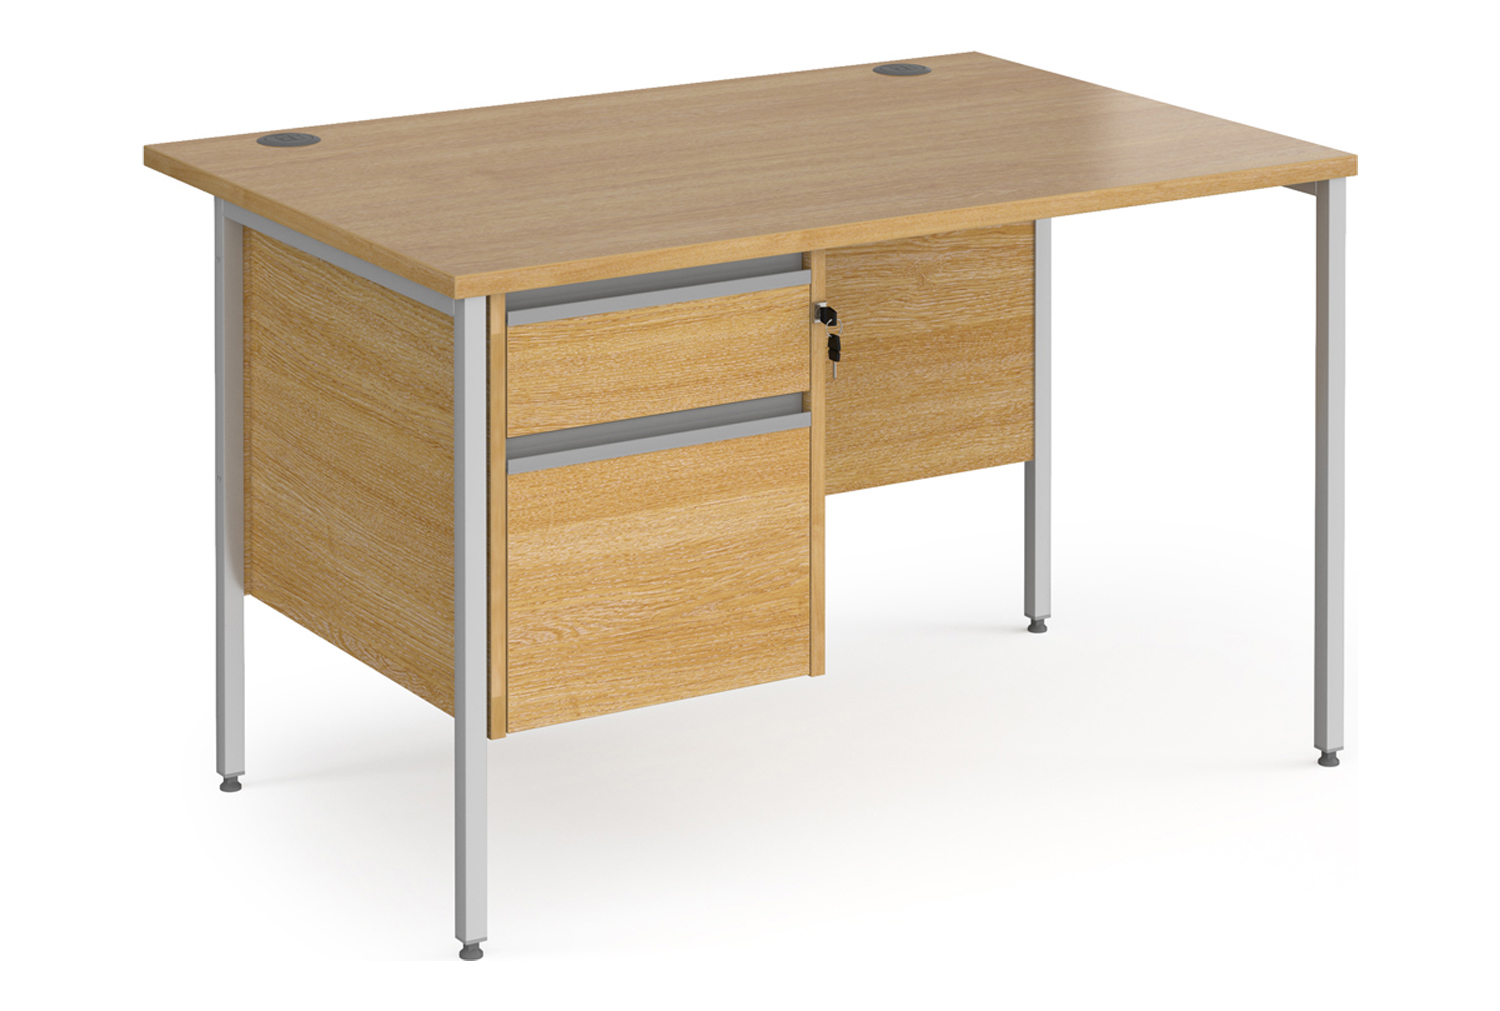 Value Line Classic+ Rectangular H-Leg Office Desk 2 Drawers (Silver Leg), 120wx80dx73h (cm), Oak